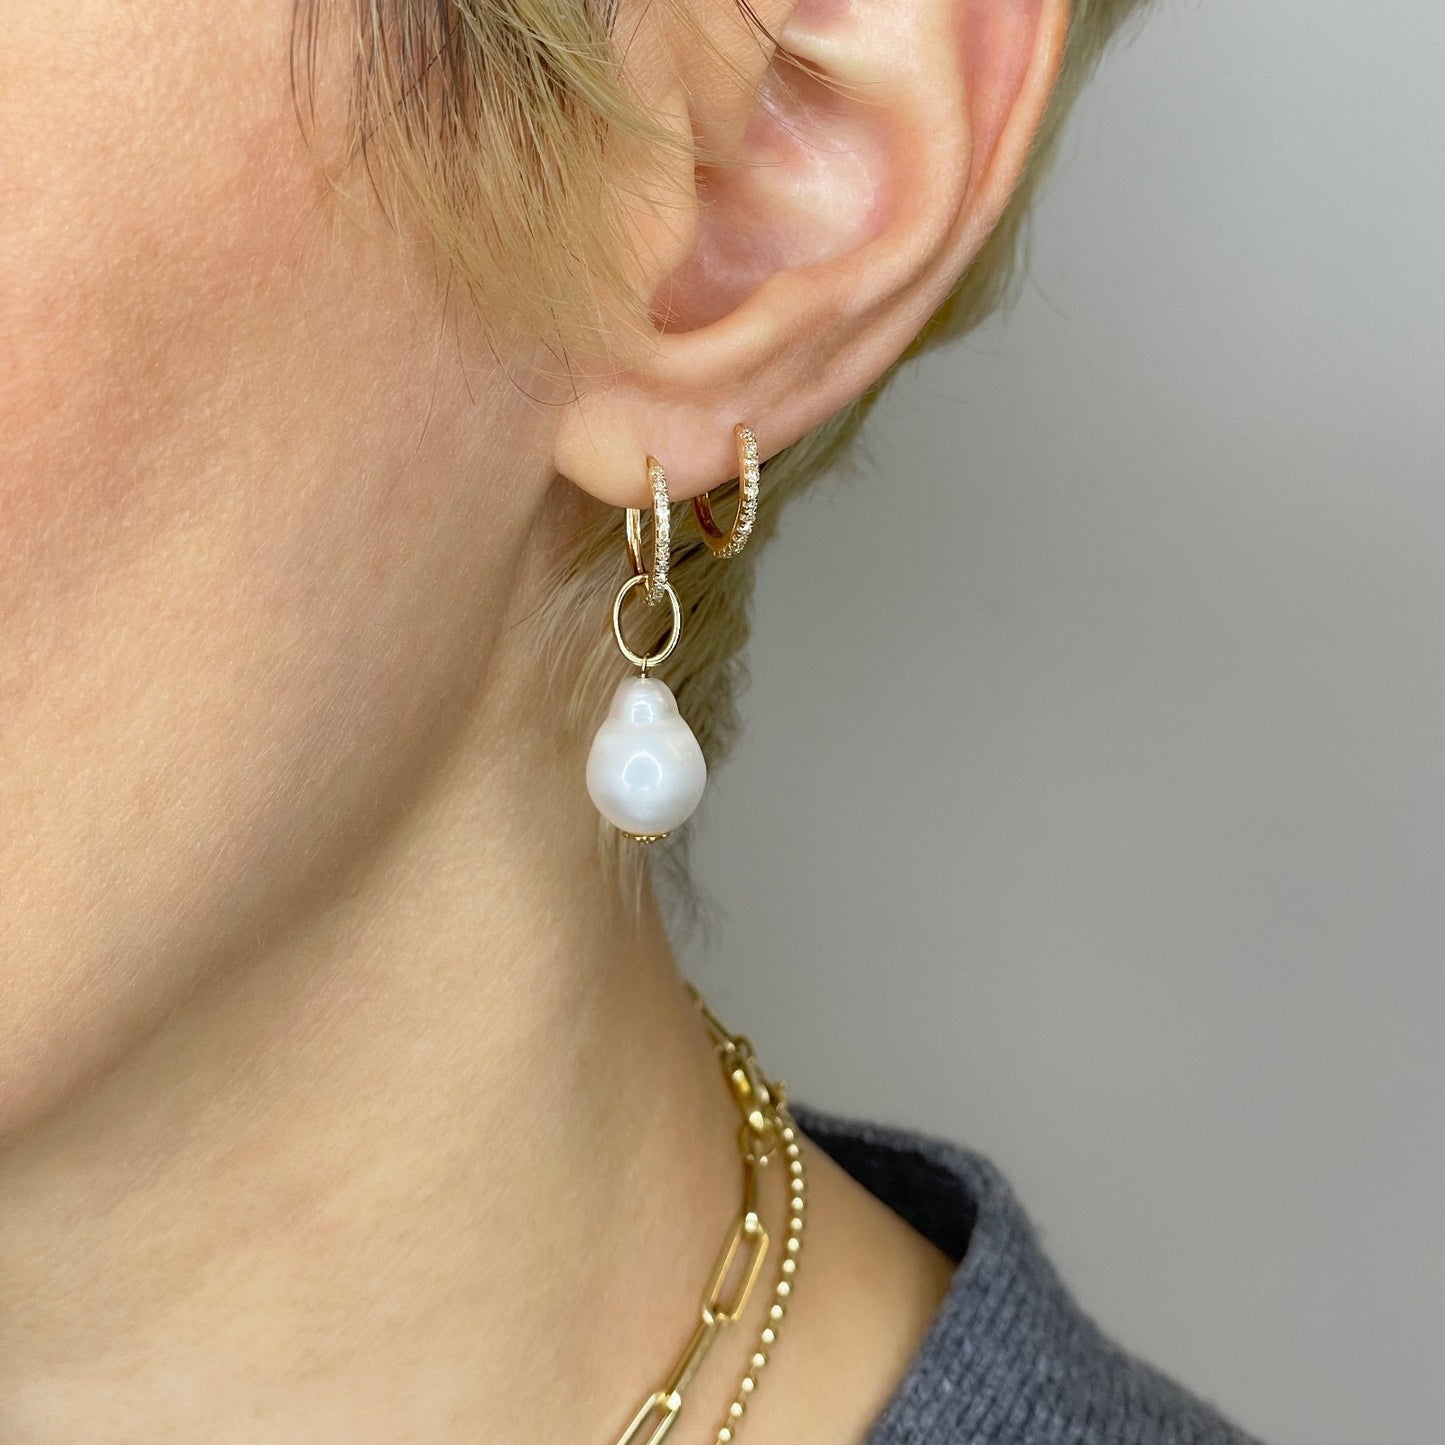 14k gold 12mm Diamond Pavé Hoop Earrings styled on a ear